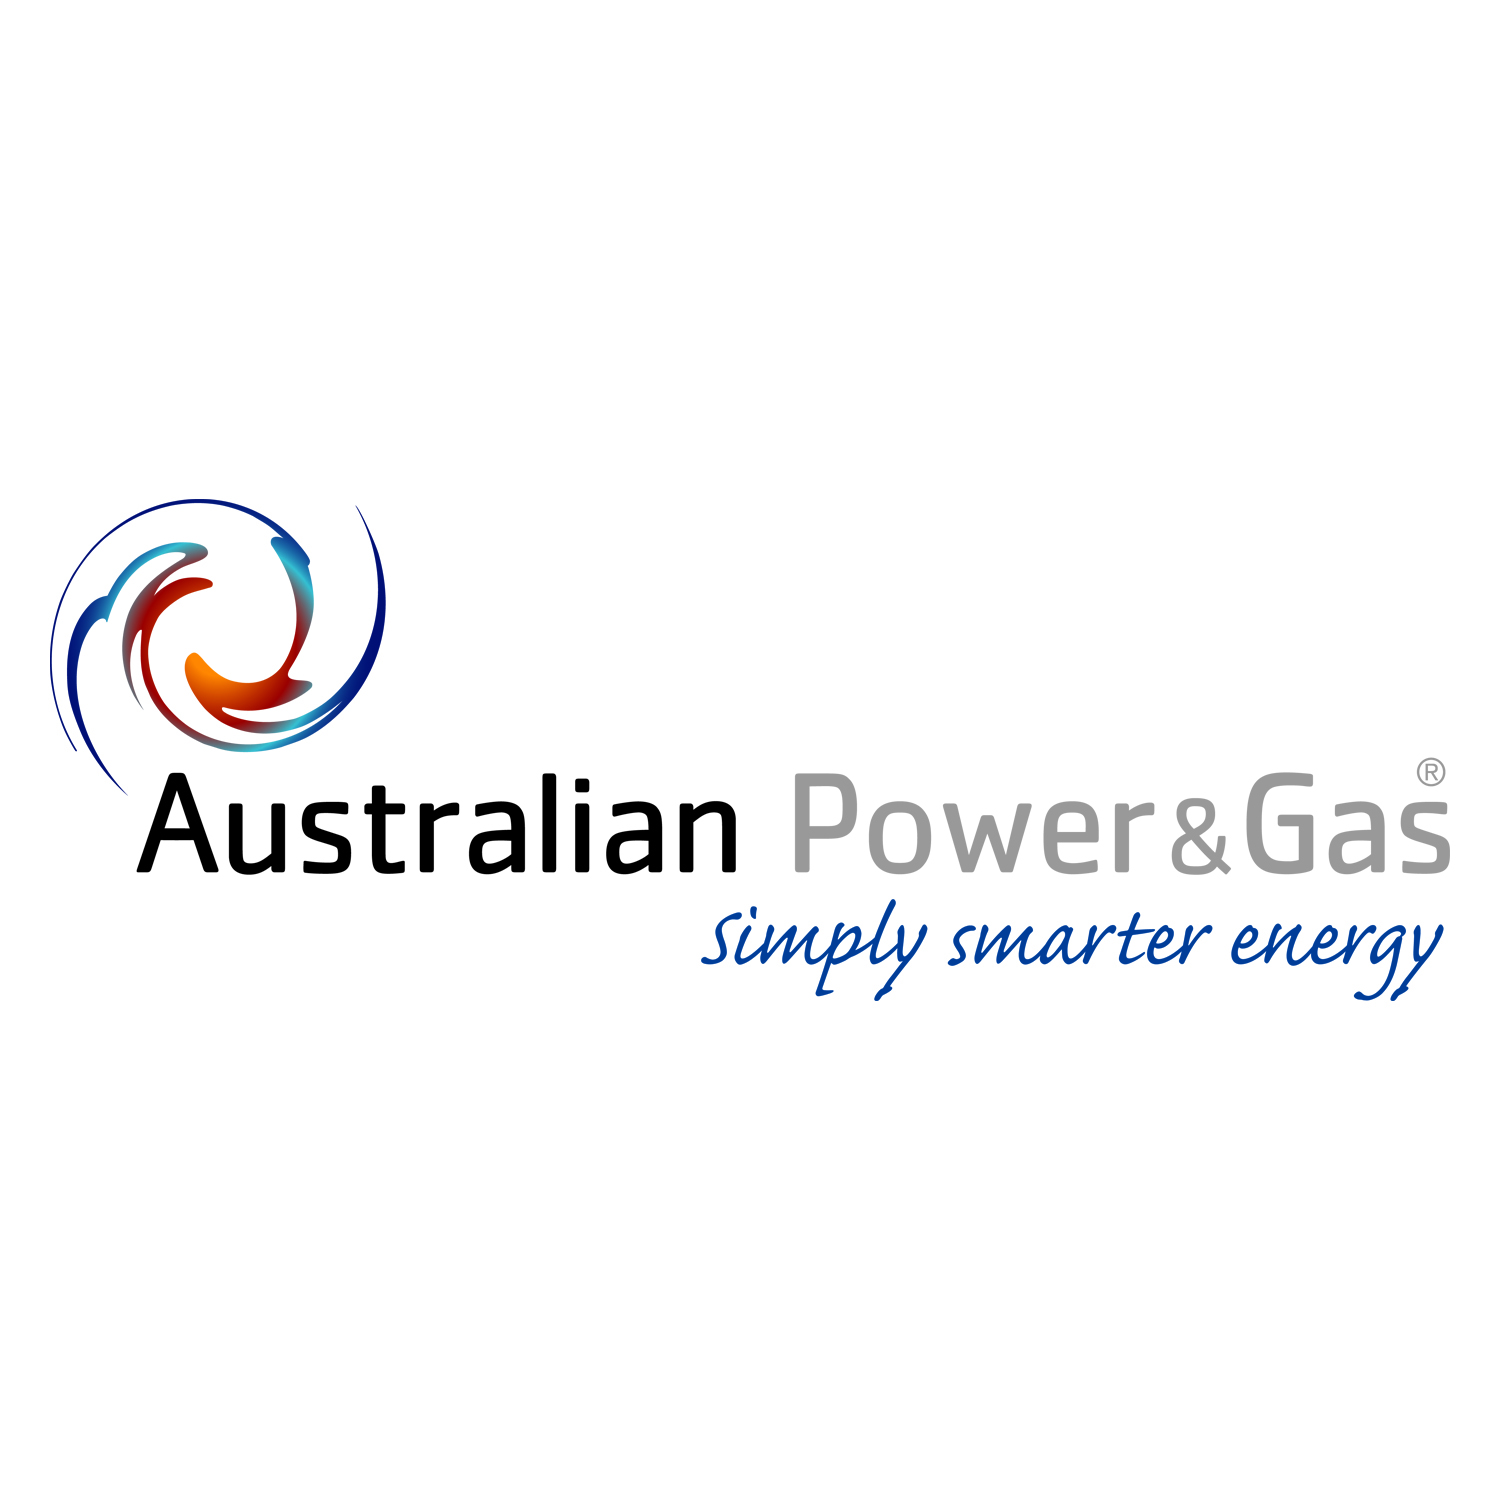 Aust Power & Gas Logo.jpg